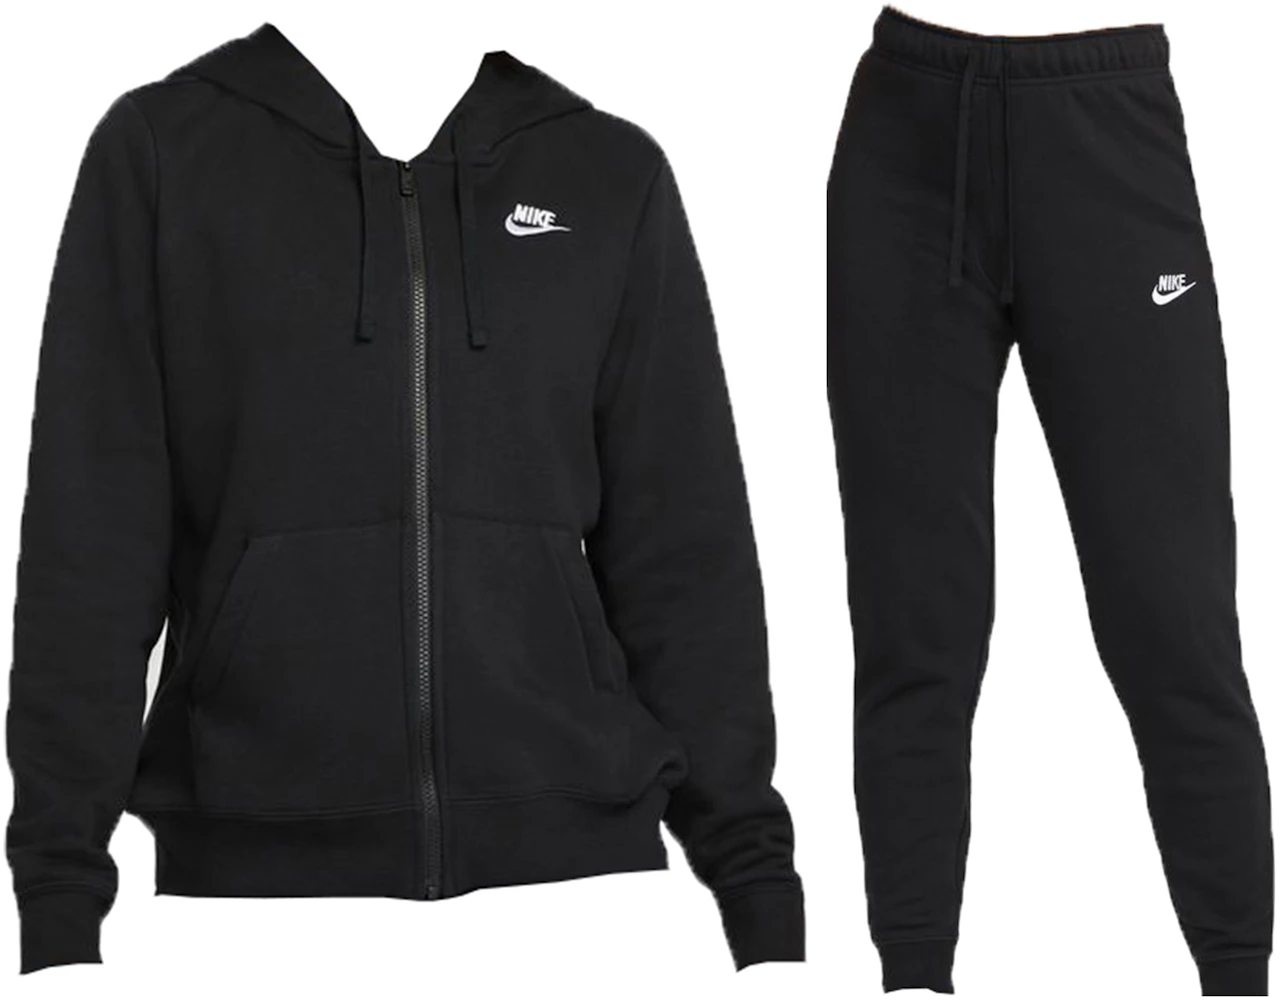 https://images.stockx.com/images/Nike-Sportswear-Club-Fleece-Full-Zip-Hoodie-Joggers-Set-Black-White.jpg?fit=fill&bg=FFFFFF&w=700&h=500&fm=webp&auto=compress&q=90&dpr=2&trim=color&updated_at=1676666835